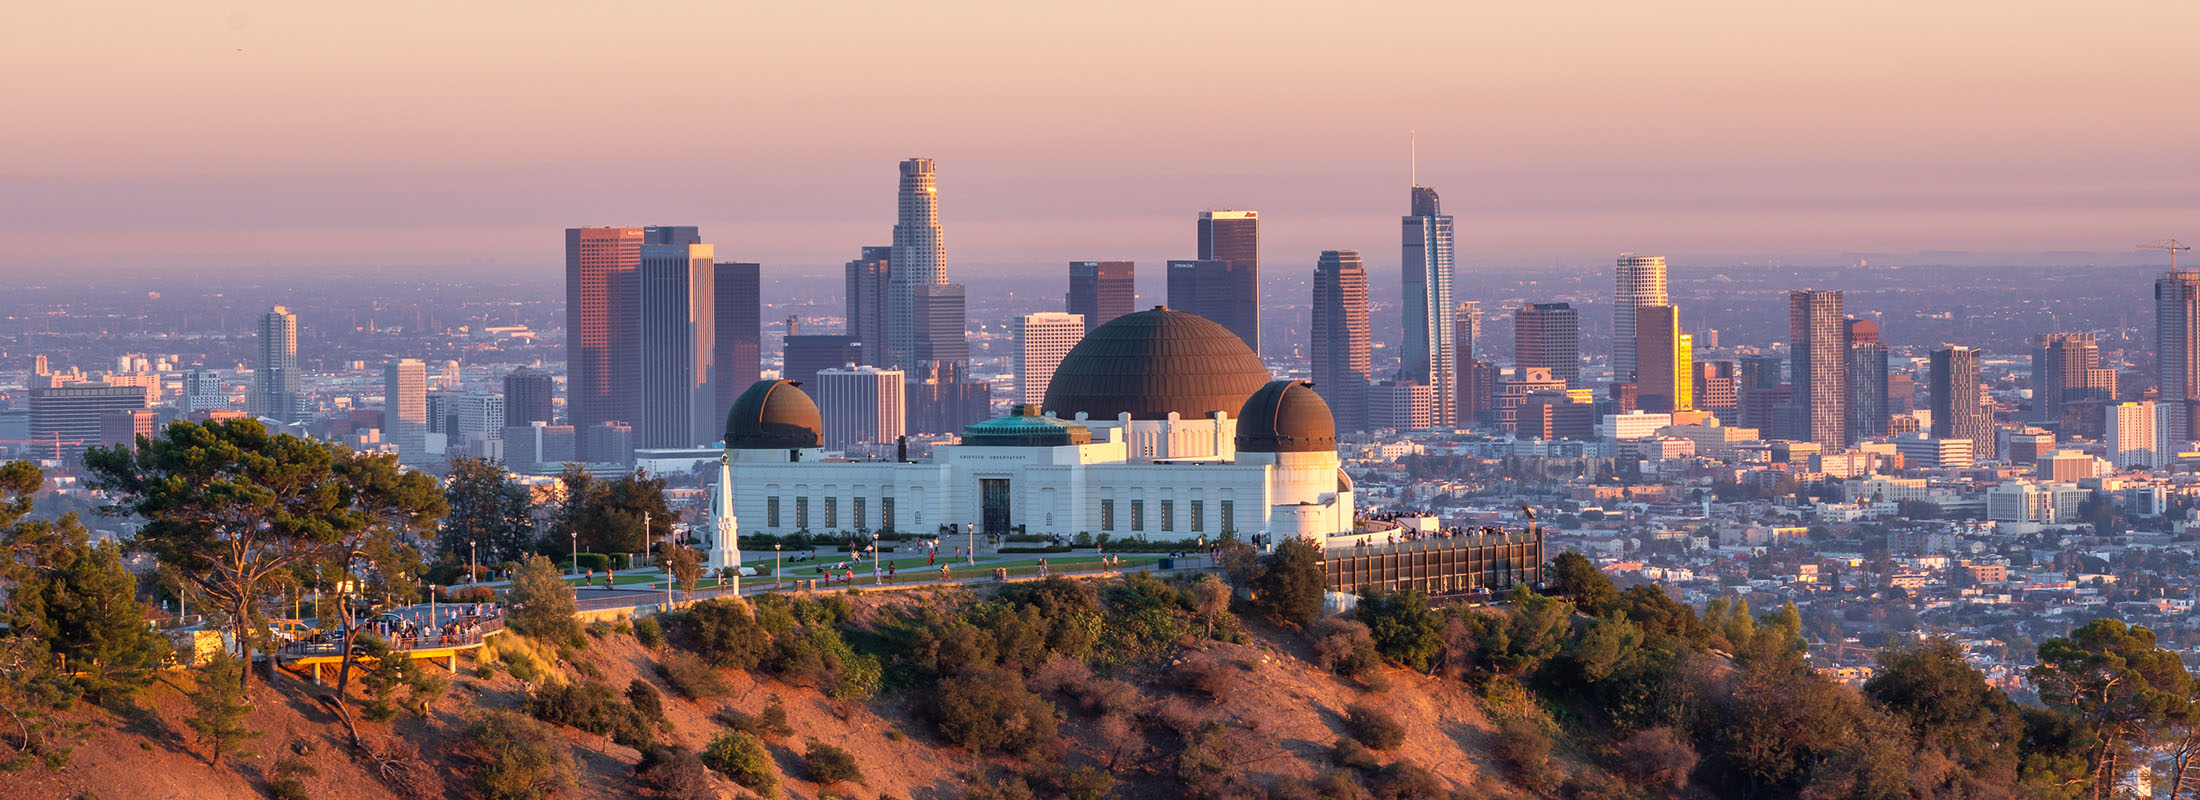 Vue de l’horizon de Los Angeles depuis les collines environnantes